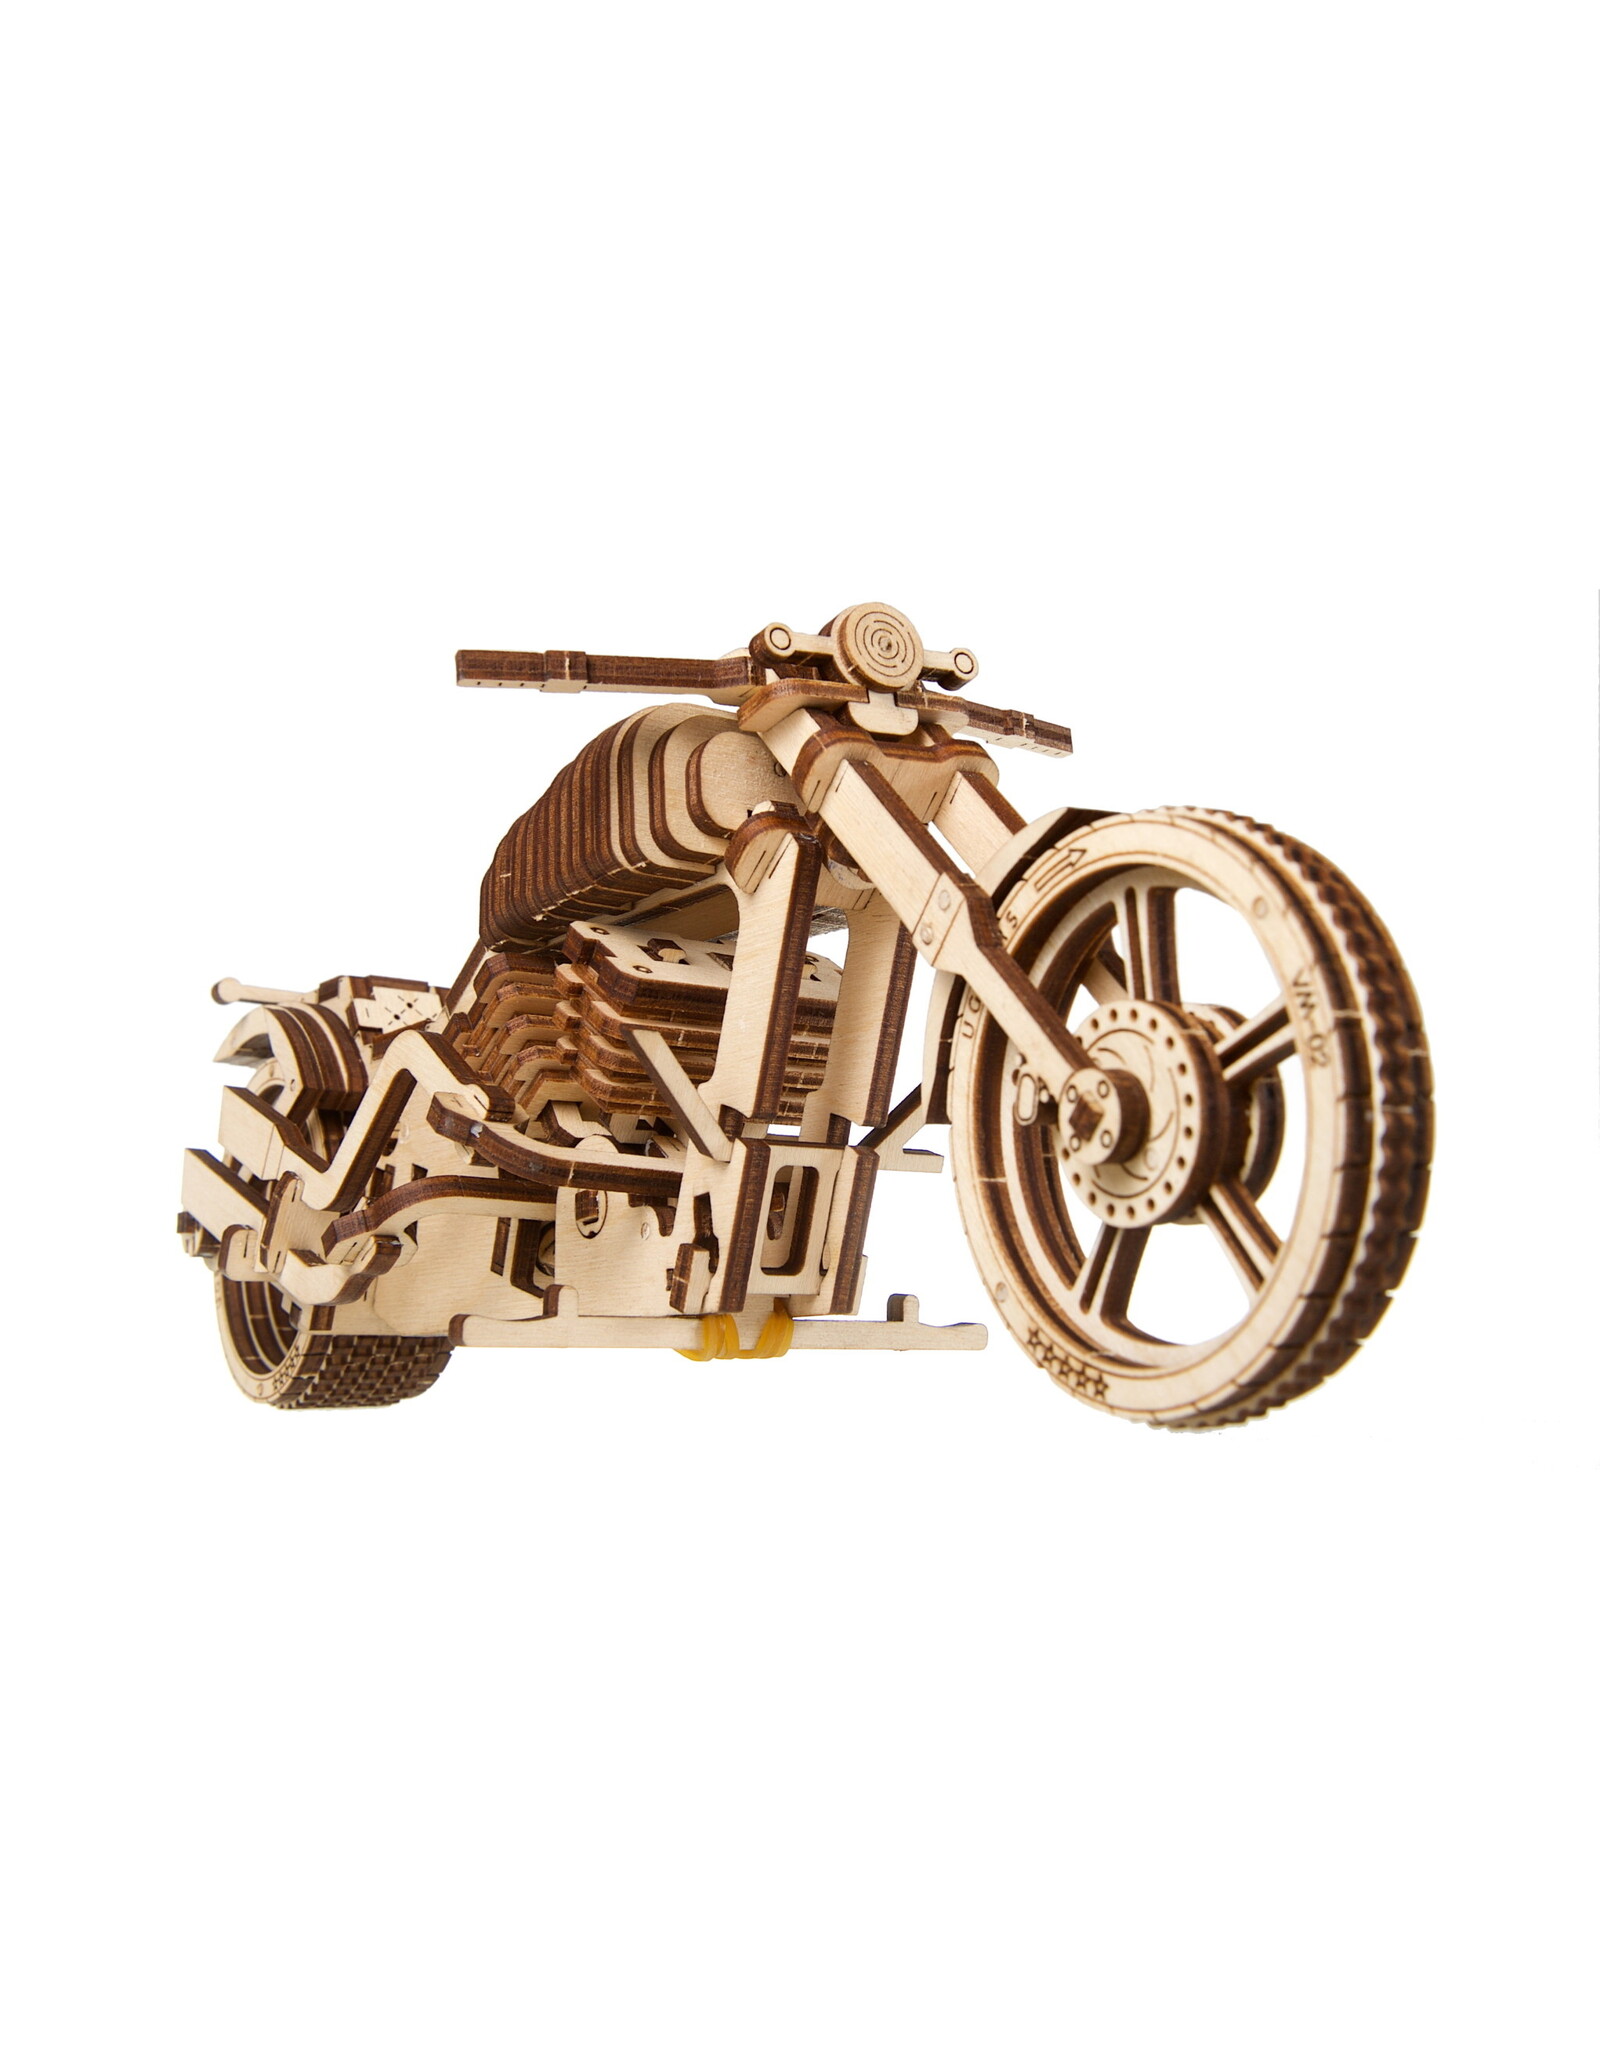 Ugears Houten Modelbouw - Motorfiets VM-02